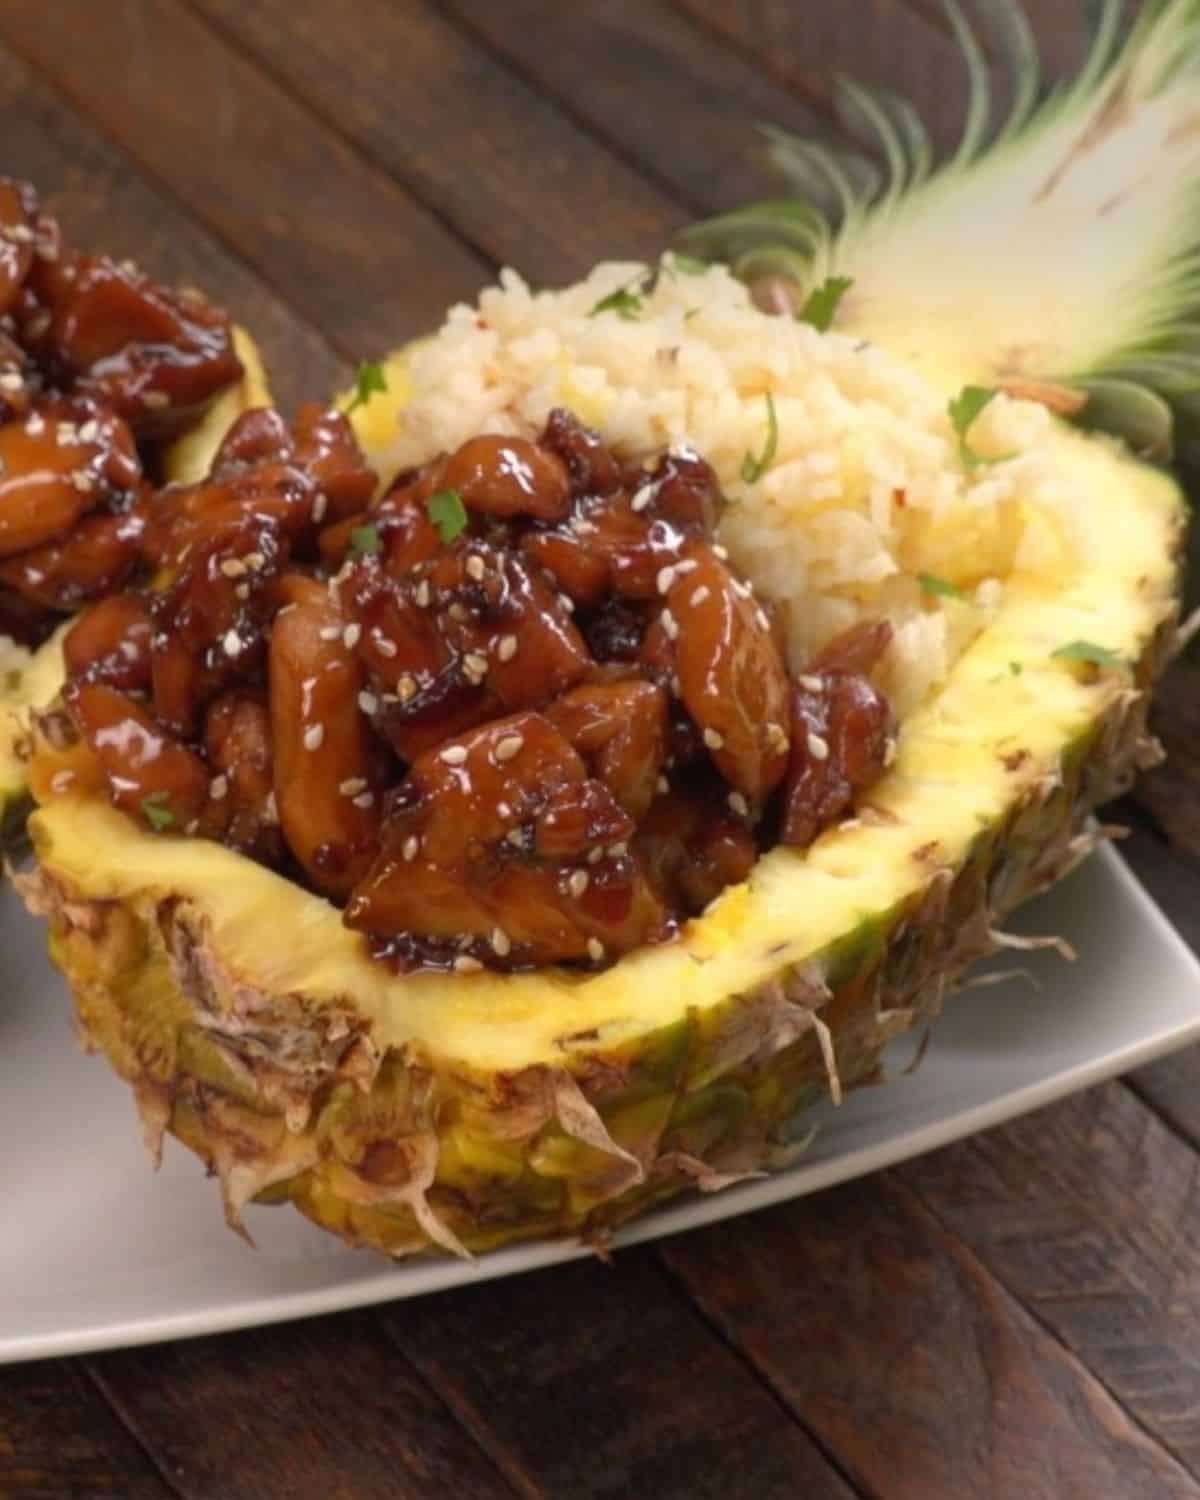 Teriyaki and pineapple rice in a pineapple rind.